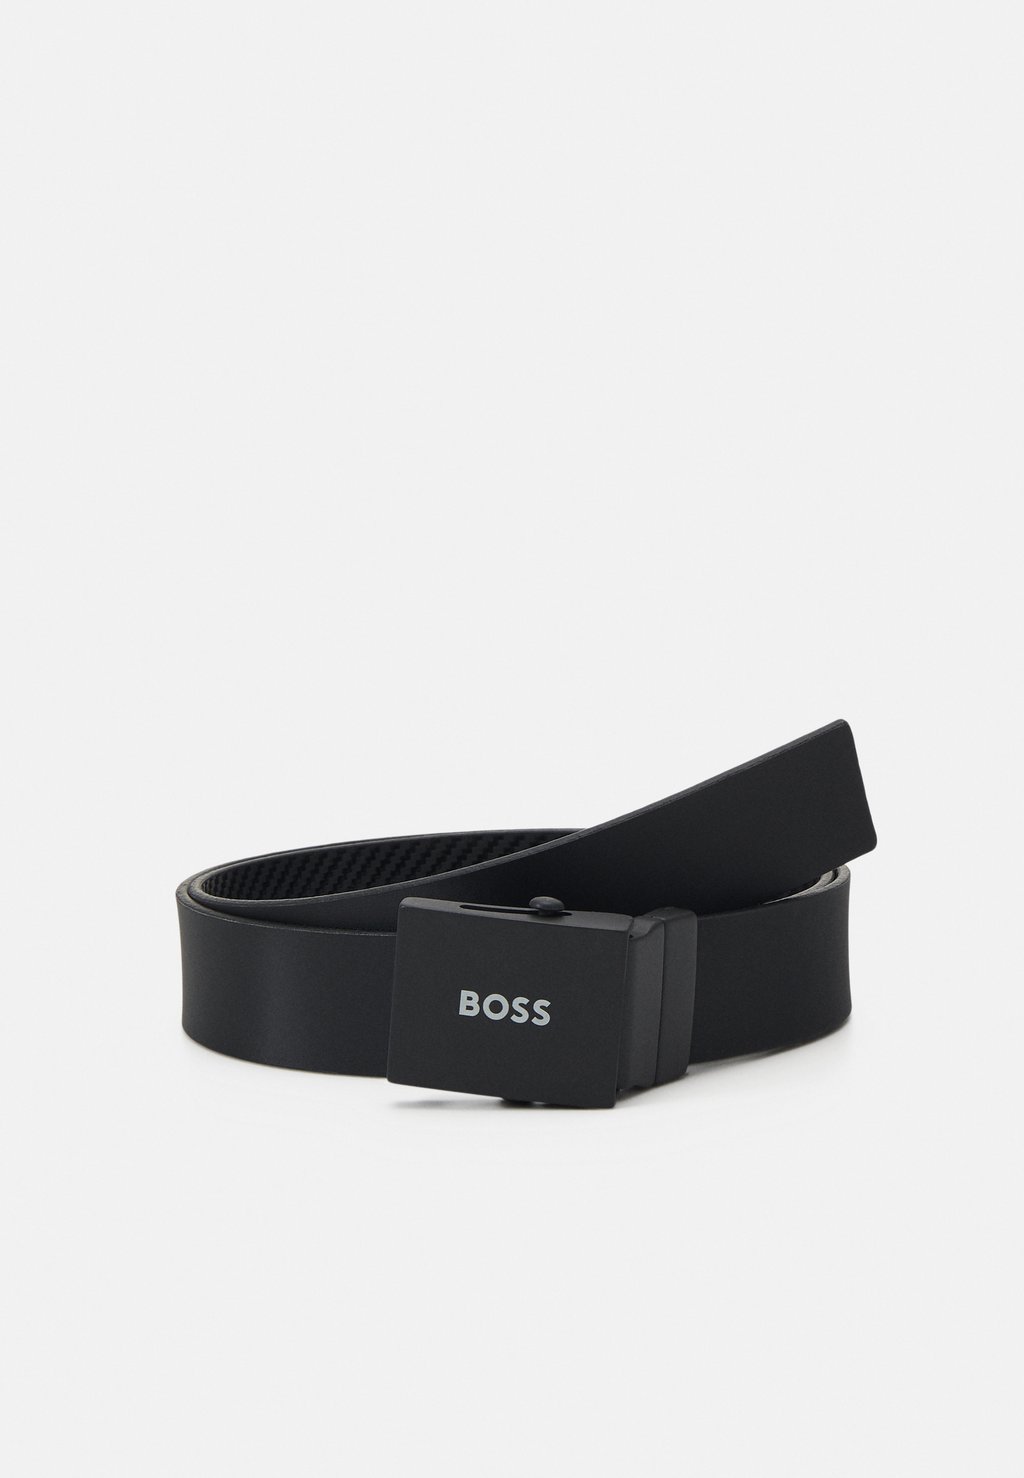 Ремень ICON BOSS, цвет black ремни boss ремень b icon